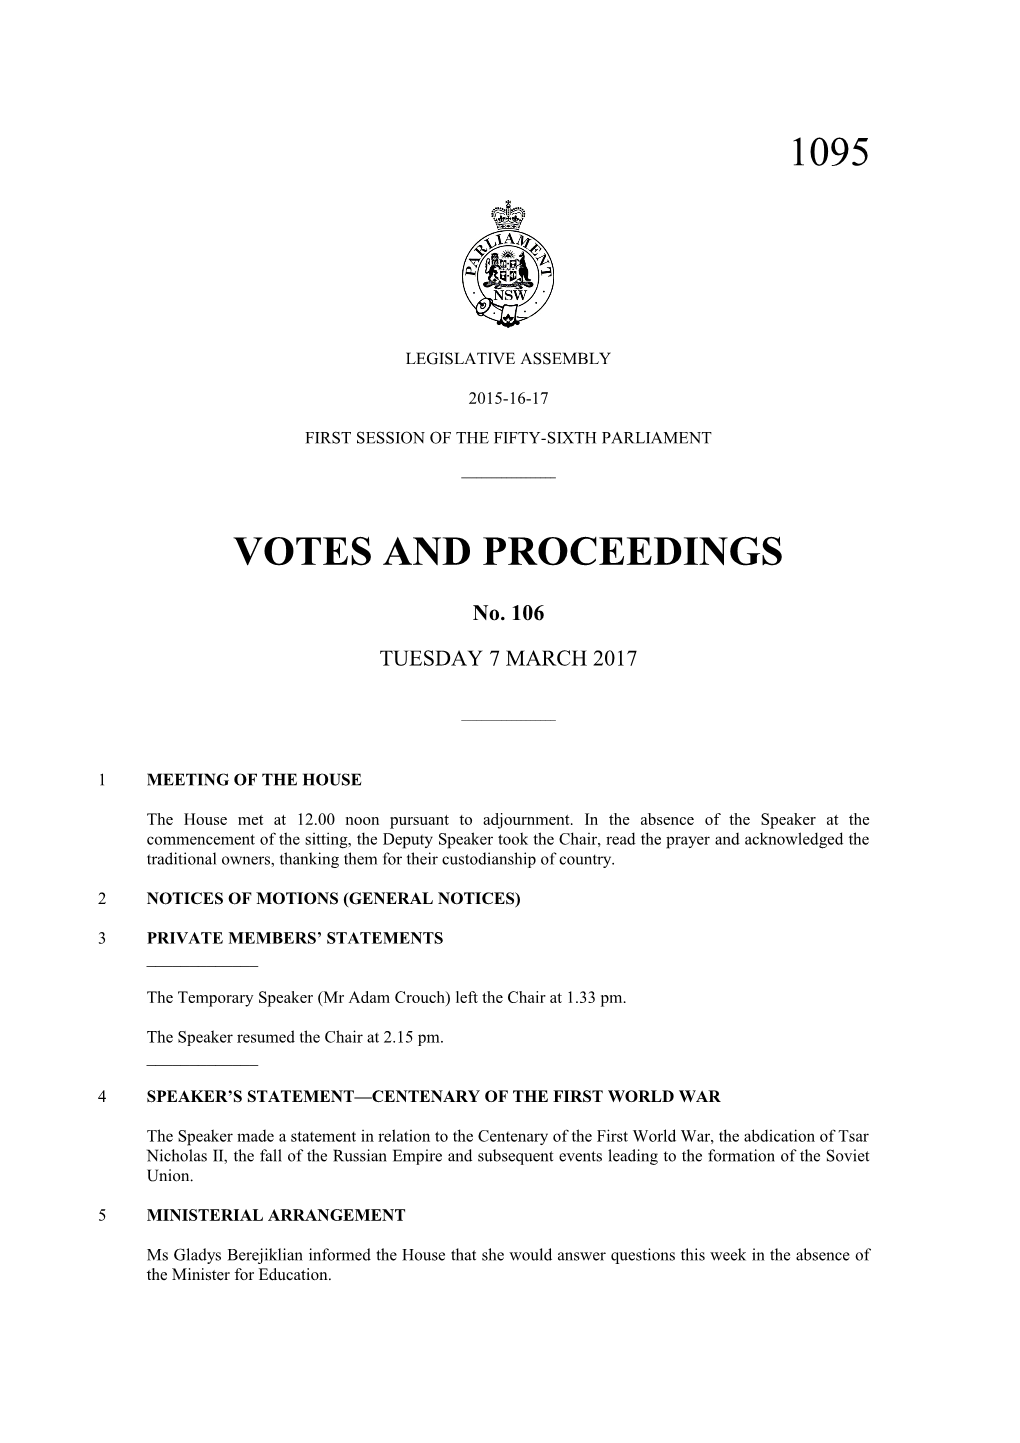 Votes and Proceedings s2